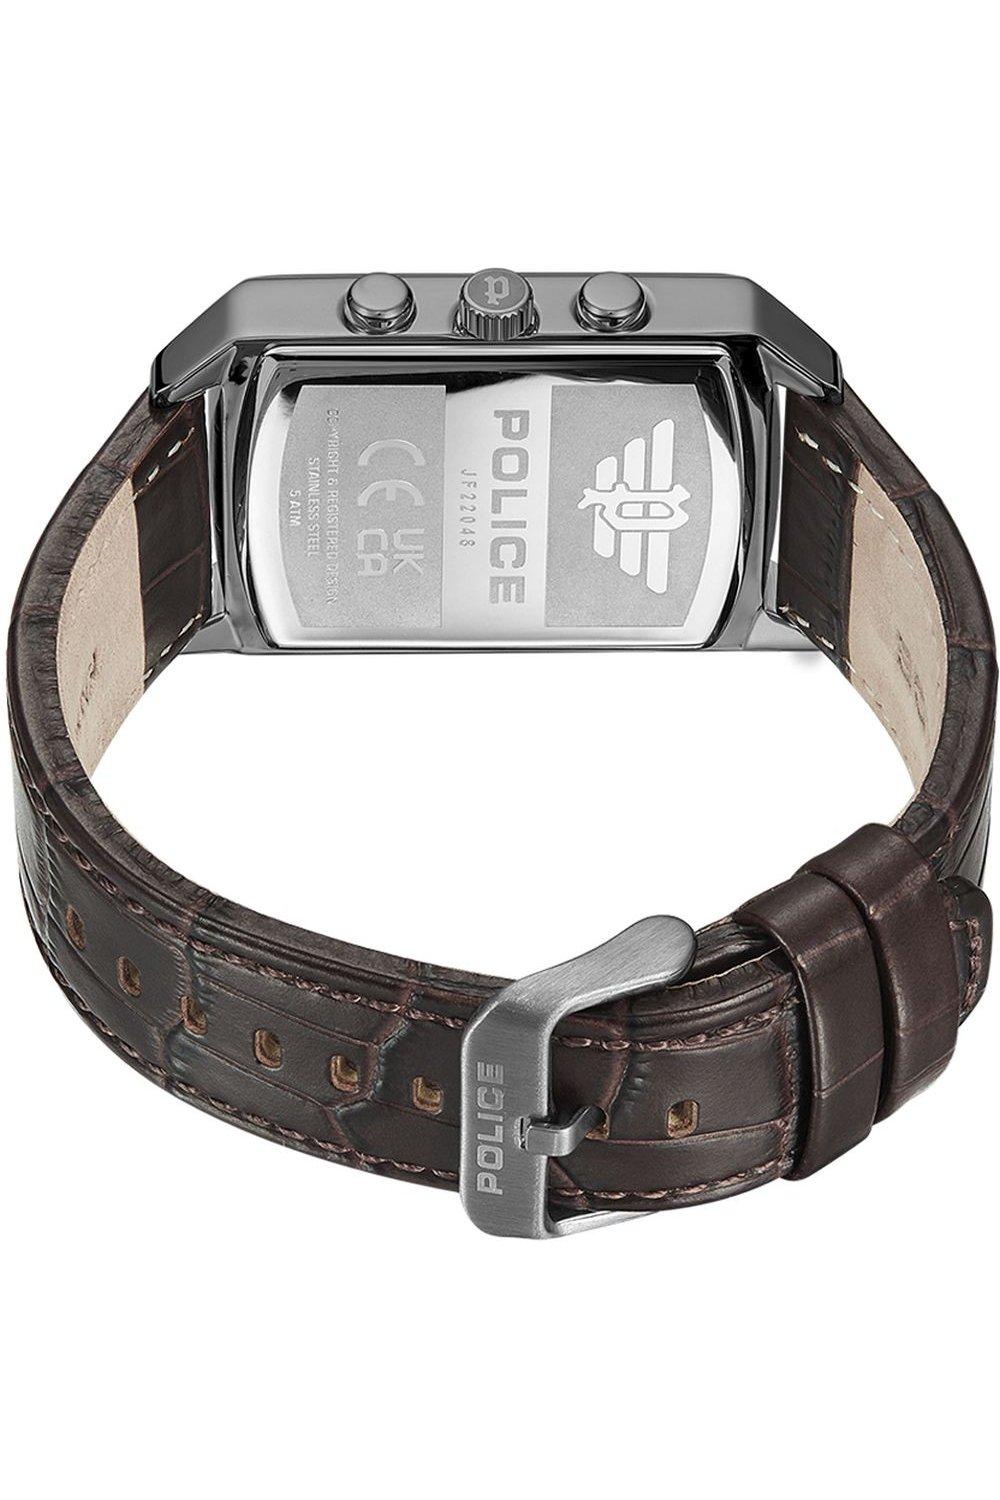 Watches | Saleve Stainless Steel Fashion Analogue Quartz Watch -  Pewjf2204802 | Police